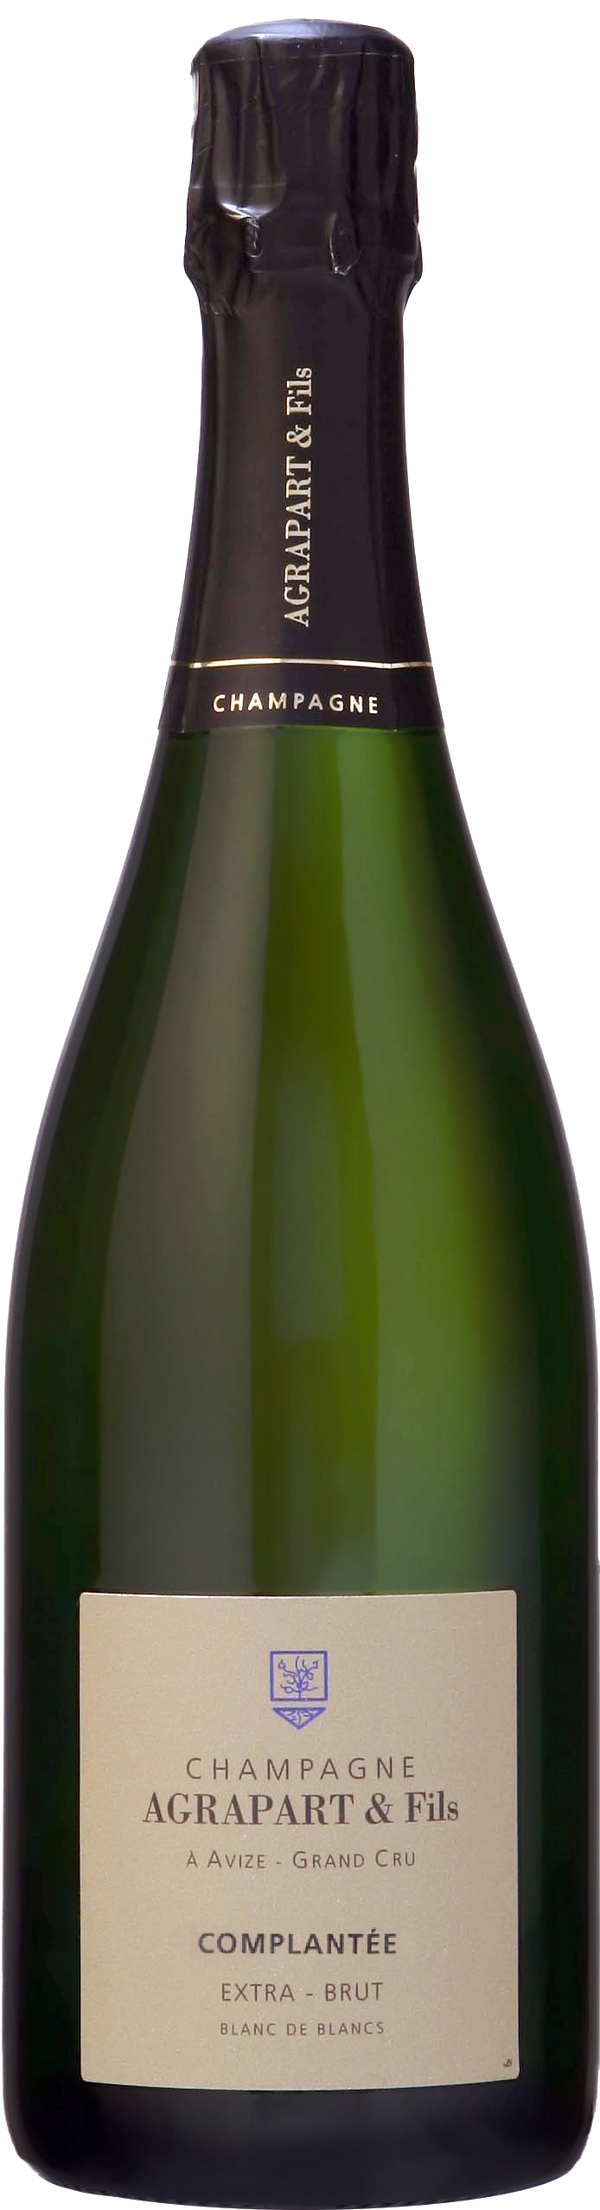 Champagne Agrapart Grand Cru Complantée NV (Disg. July 2021)